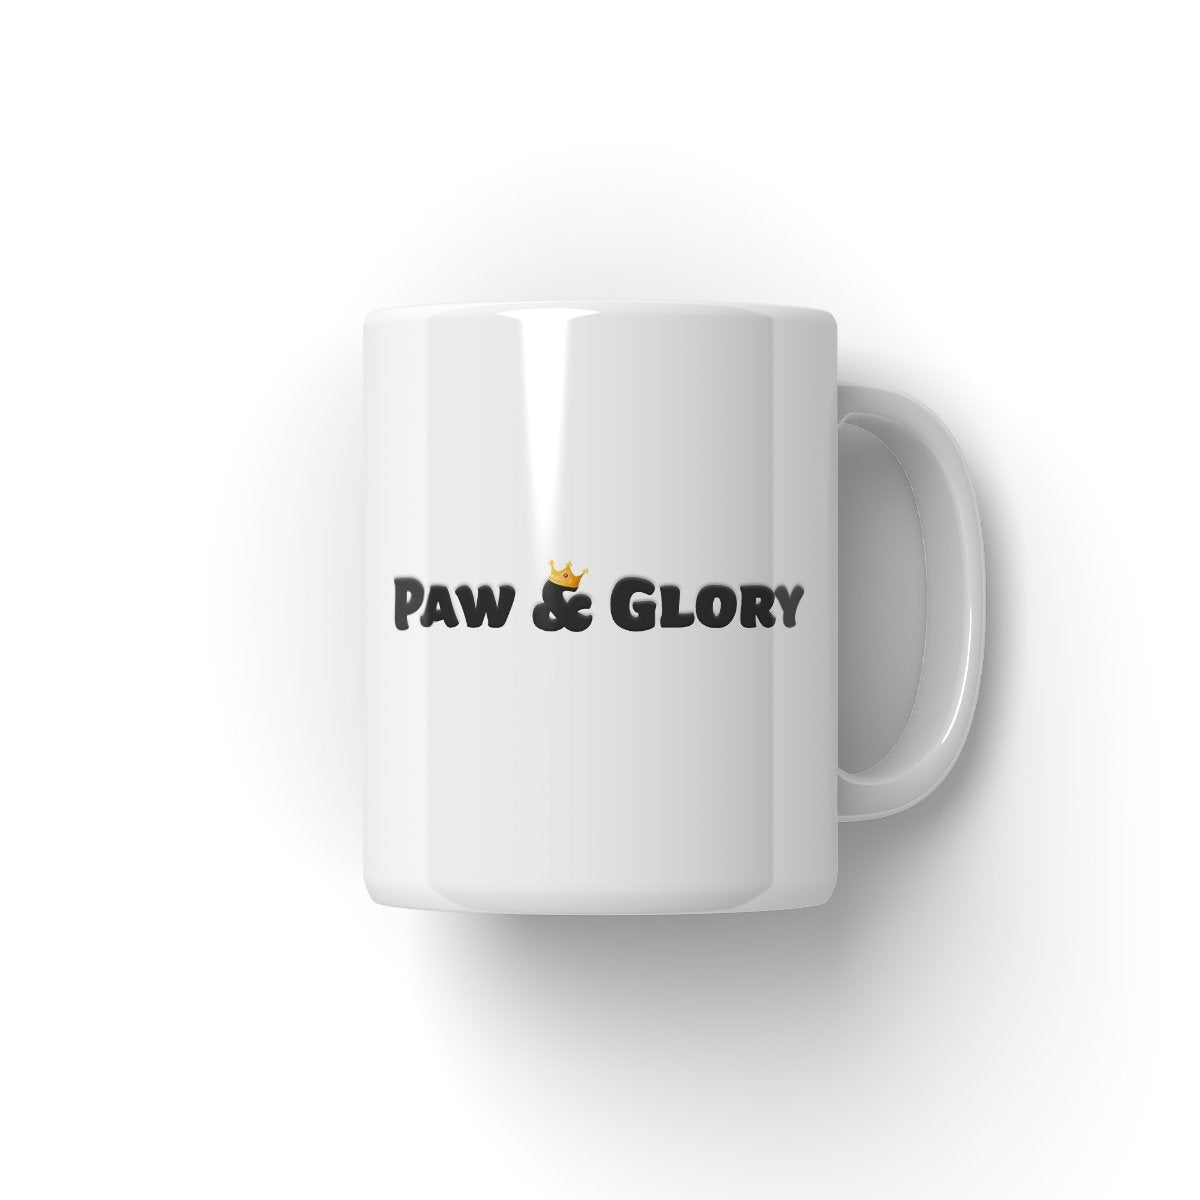 Paw & Glory, paw and glory, personalized coffee mug with dogs, personalized dog mugs, personalized puppy mug, customized dog coffee mugs, custom pet mug, dog on mug, Pet Portraits Mug,